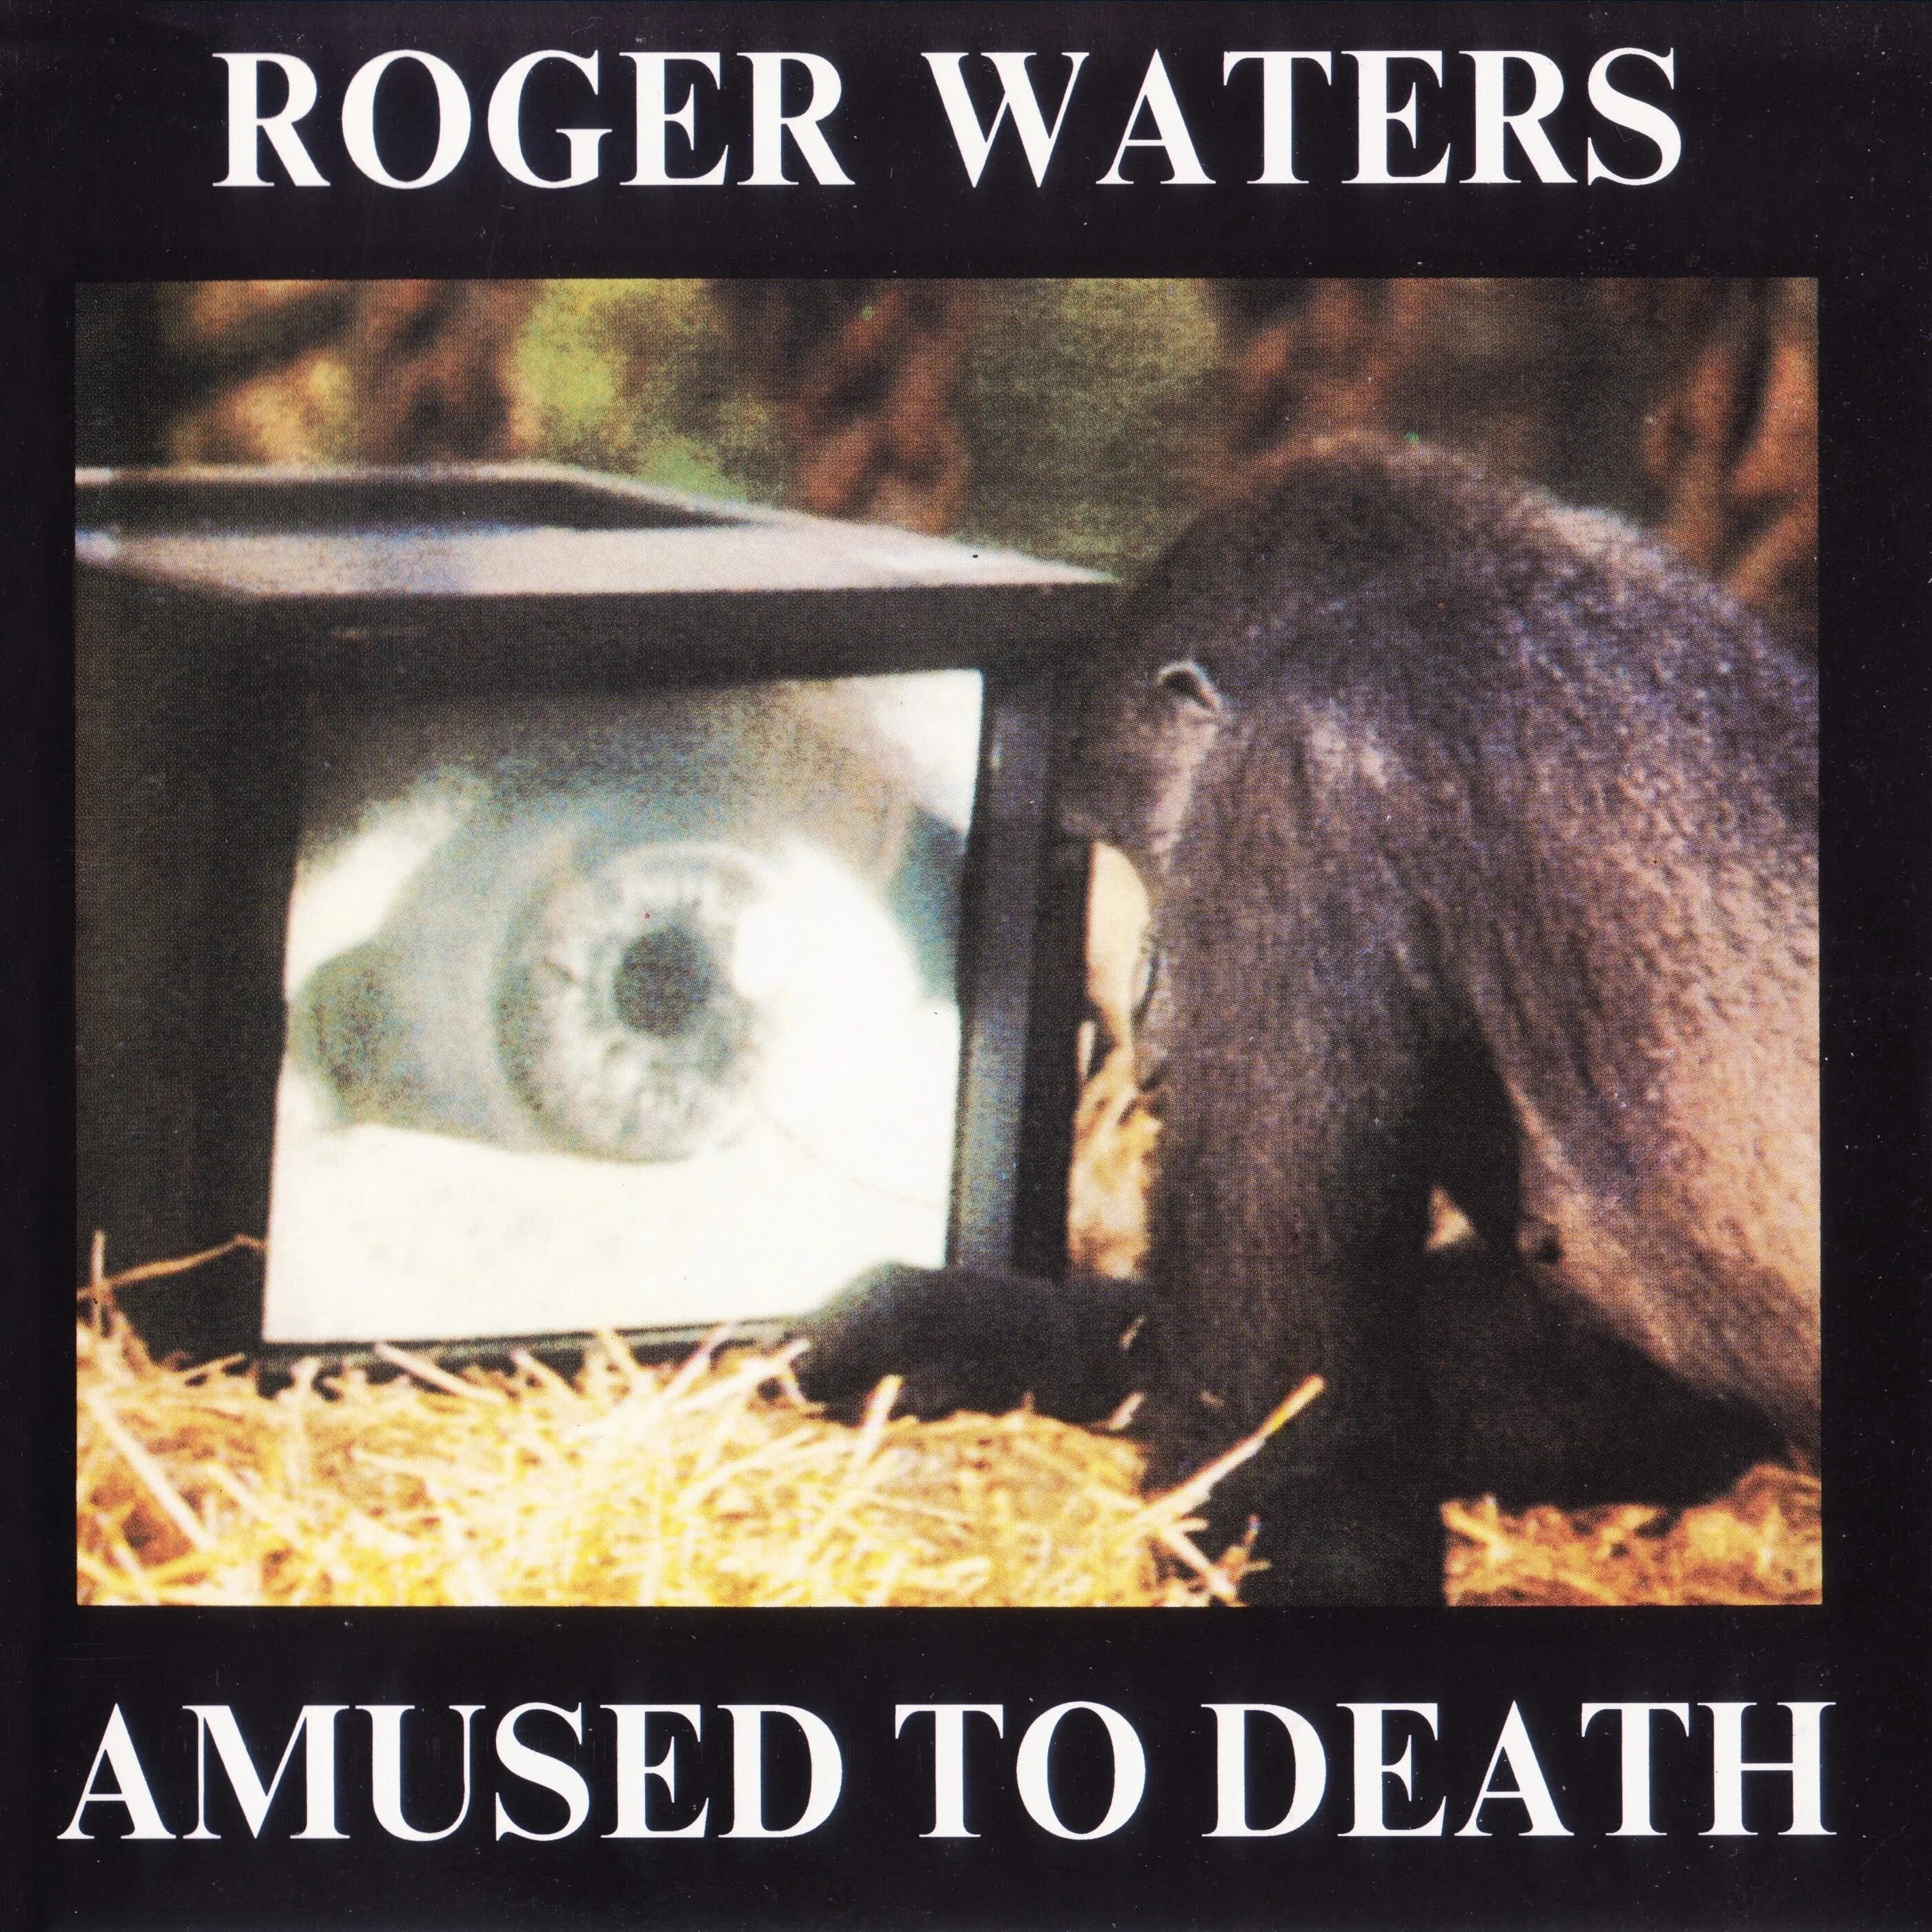 Amused to death. Роджер Уотерс 1992 amused to Death. Waters amused to Death обложка. Amused. Roger Waters - amused to Death 1992 [br].